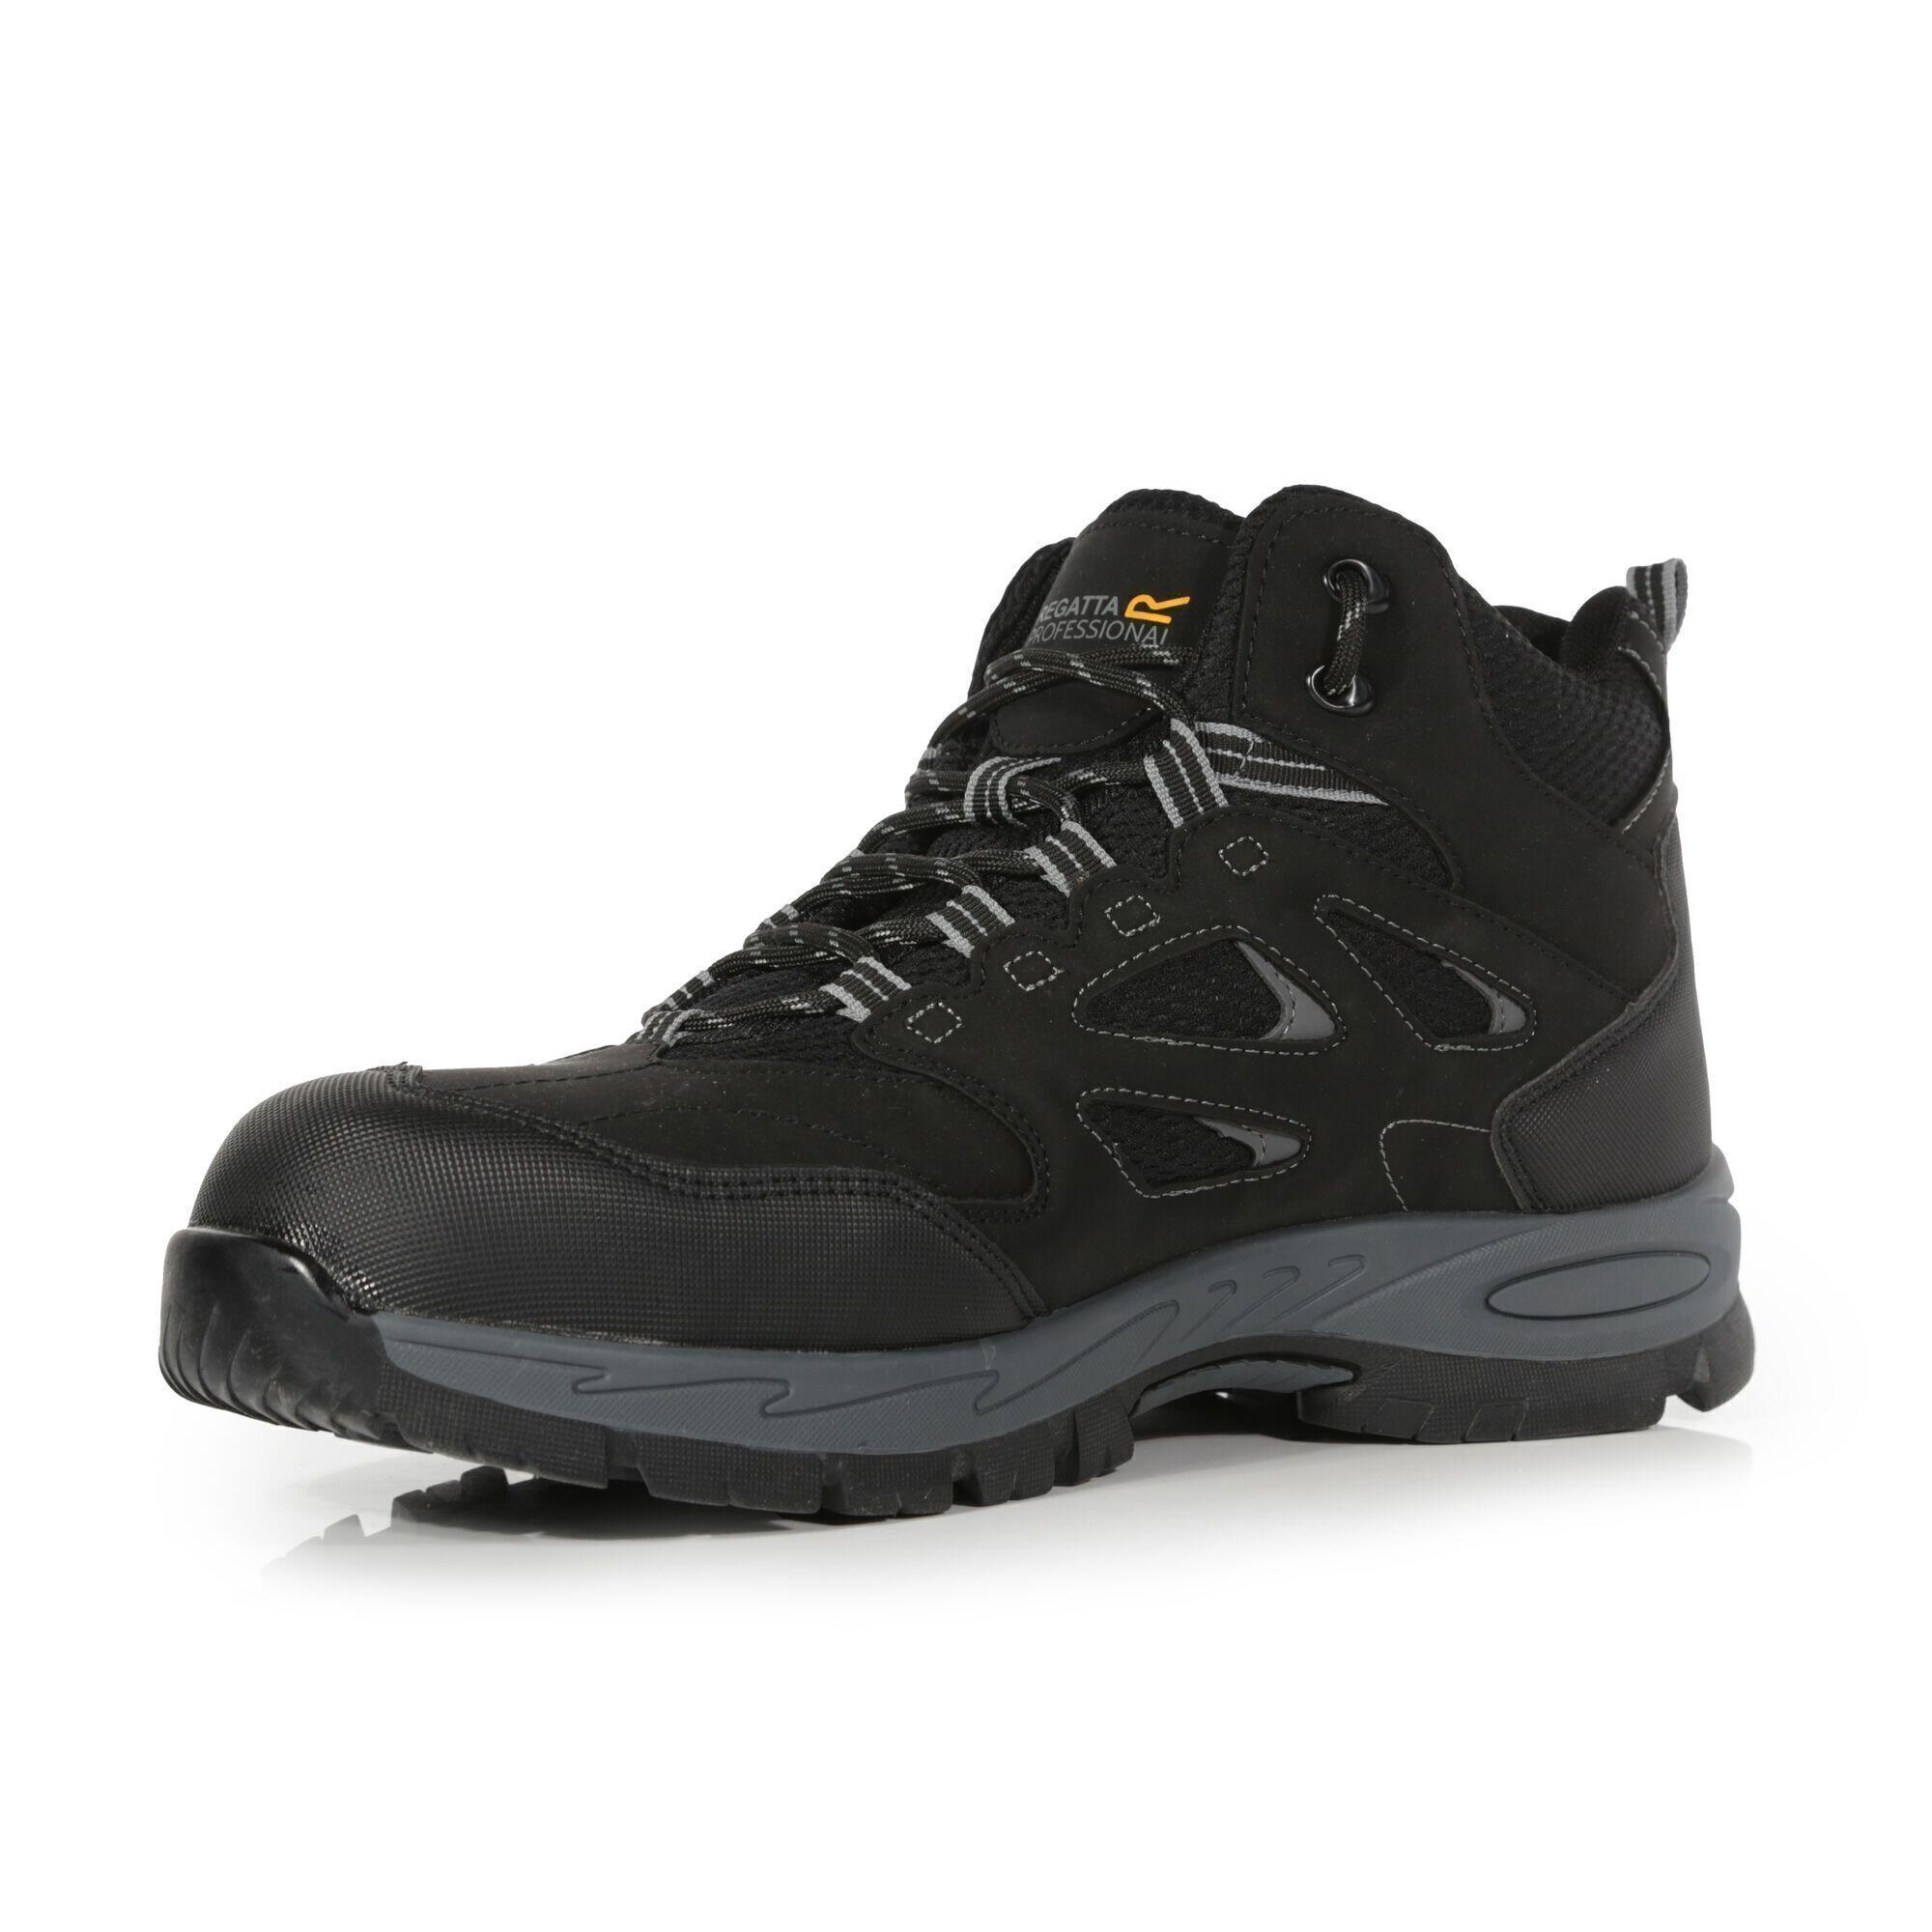 Mens Mudstone Safety Boots (Black/Granite) 3/5